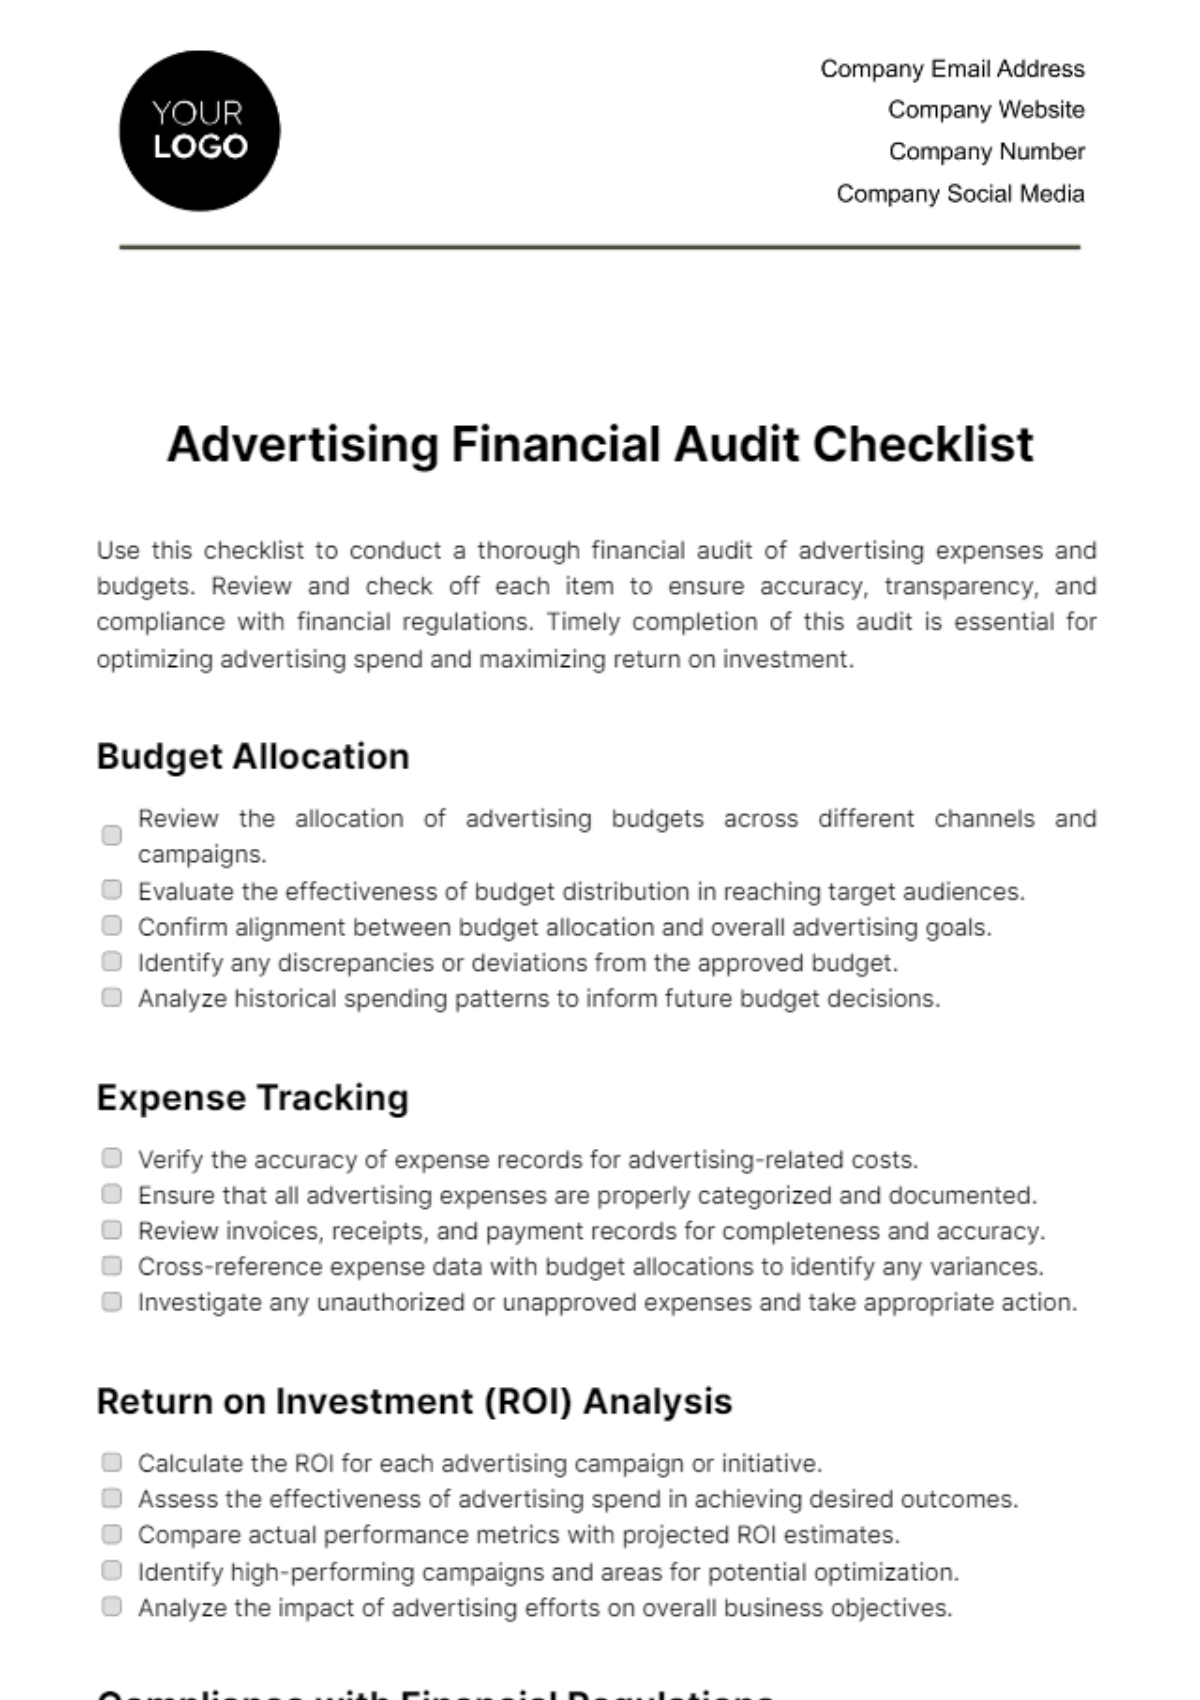 Advertising Financial Audit Checklist Template